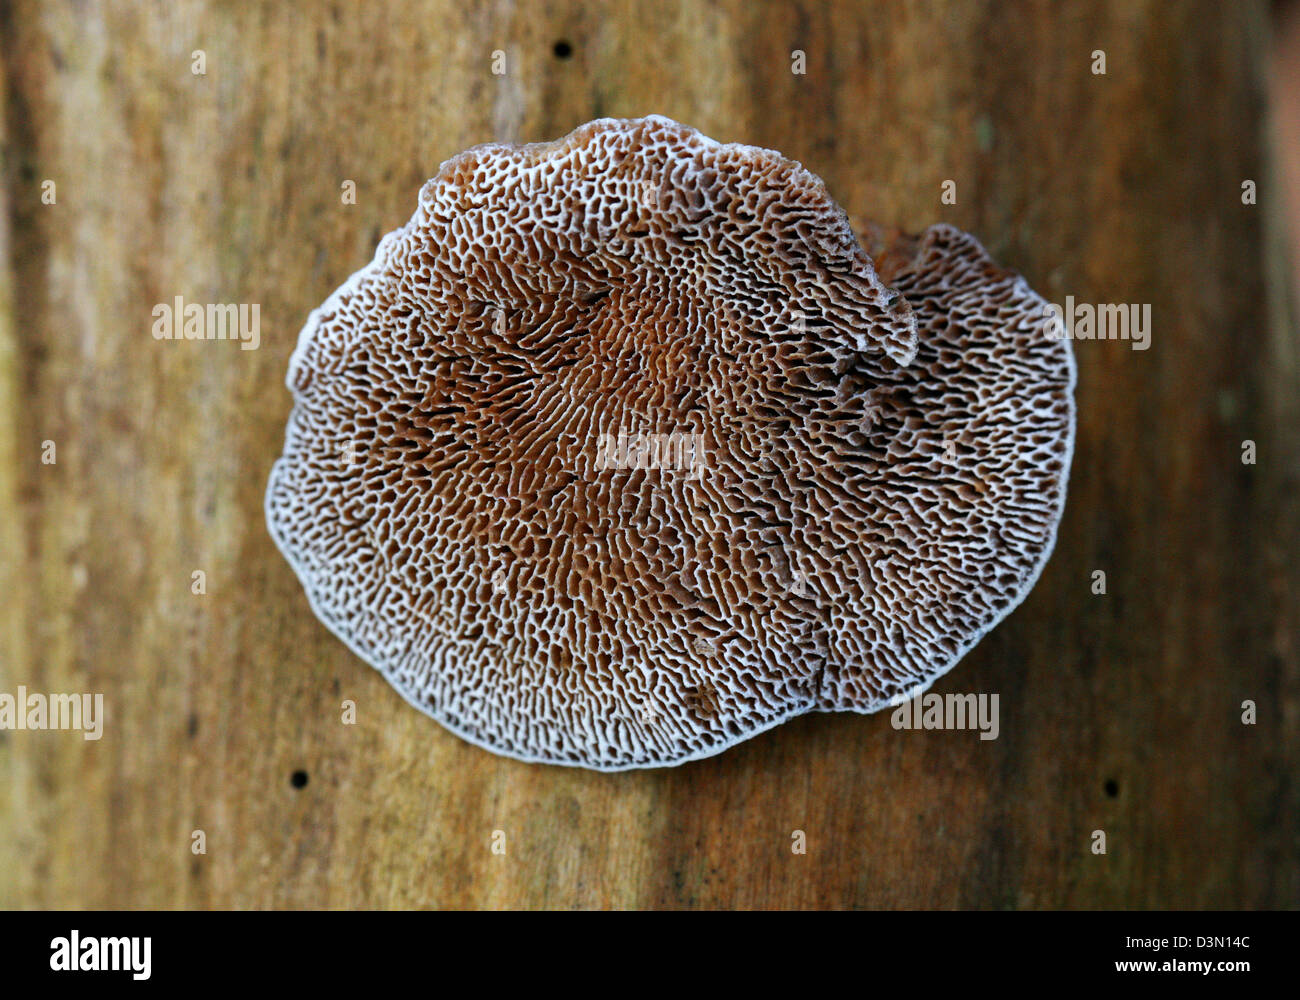 Young Blushing Bracket Fungus, Daedaleopsis confragosa, Polyporaceae. Showing Underside Gills. Stock Photo